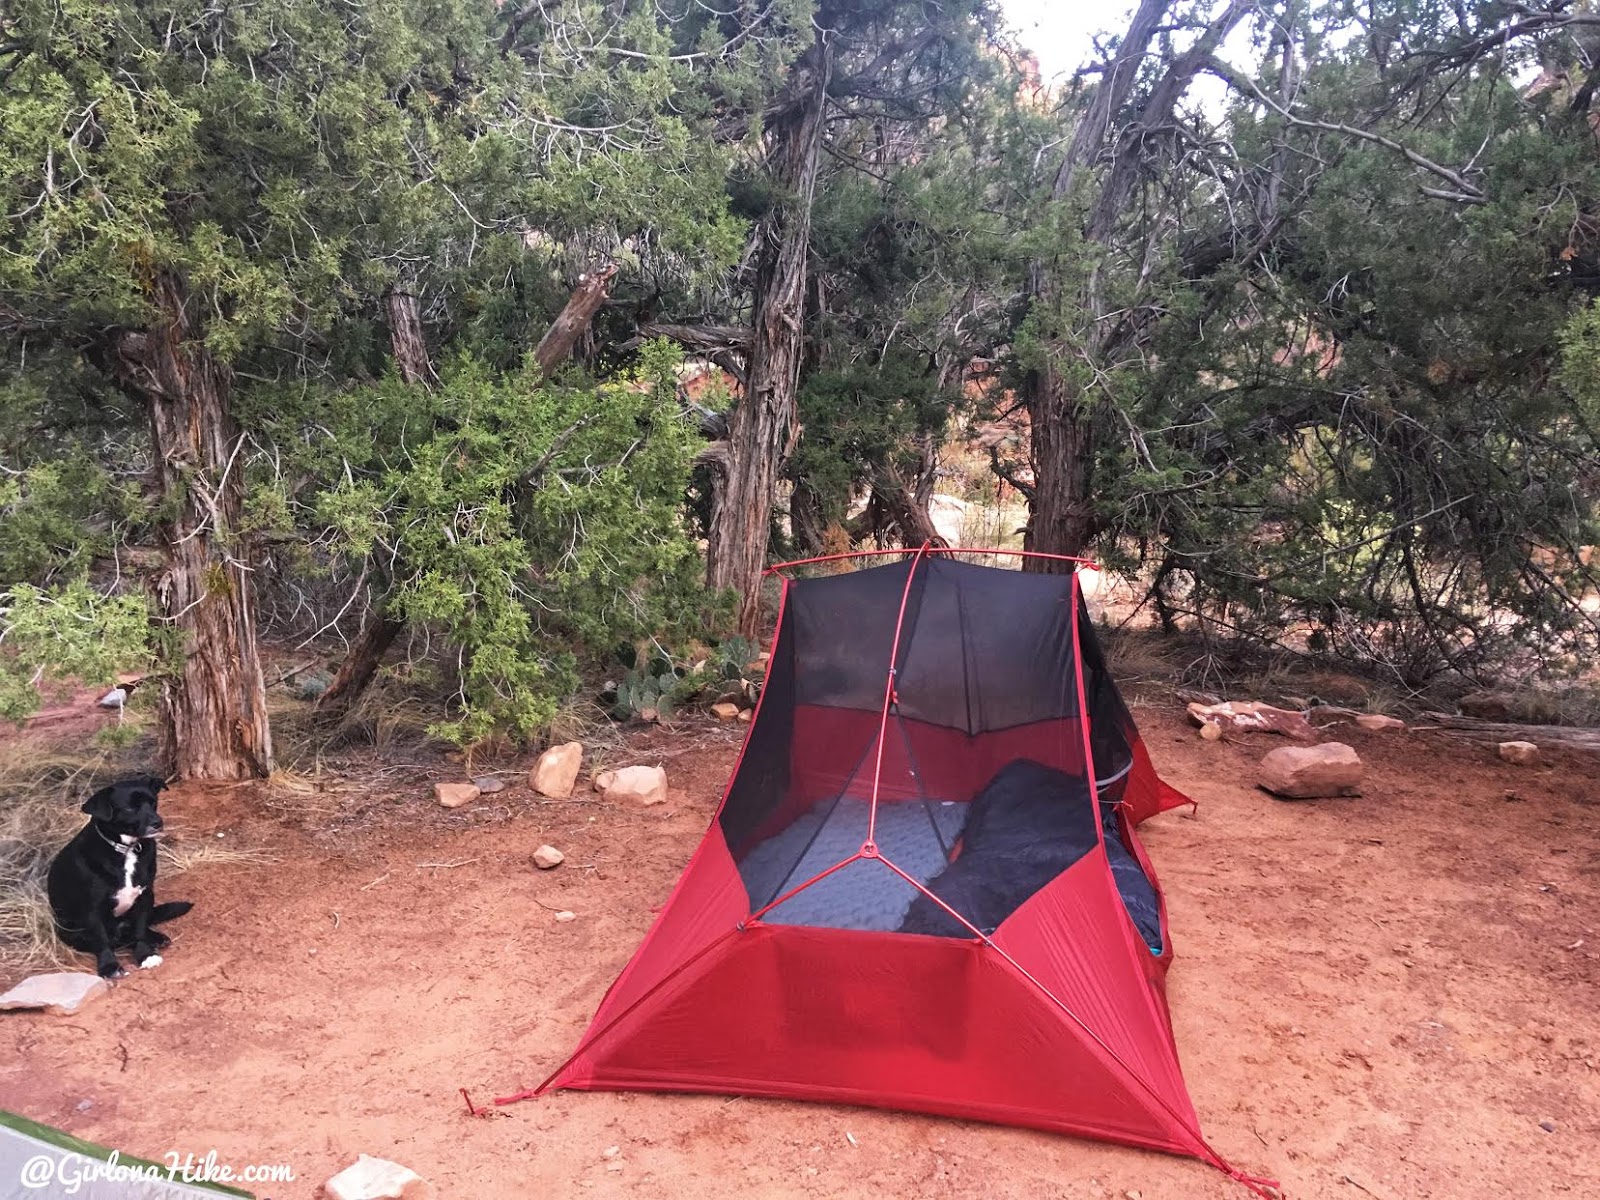 Backpacking Fish & Owl Canyons, Cedar Mesa & Bears Ears National Monument